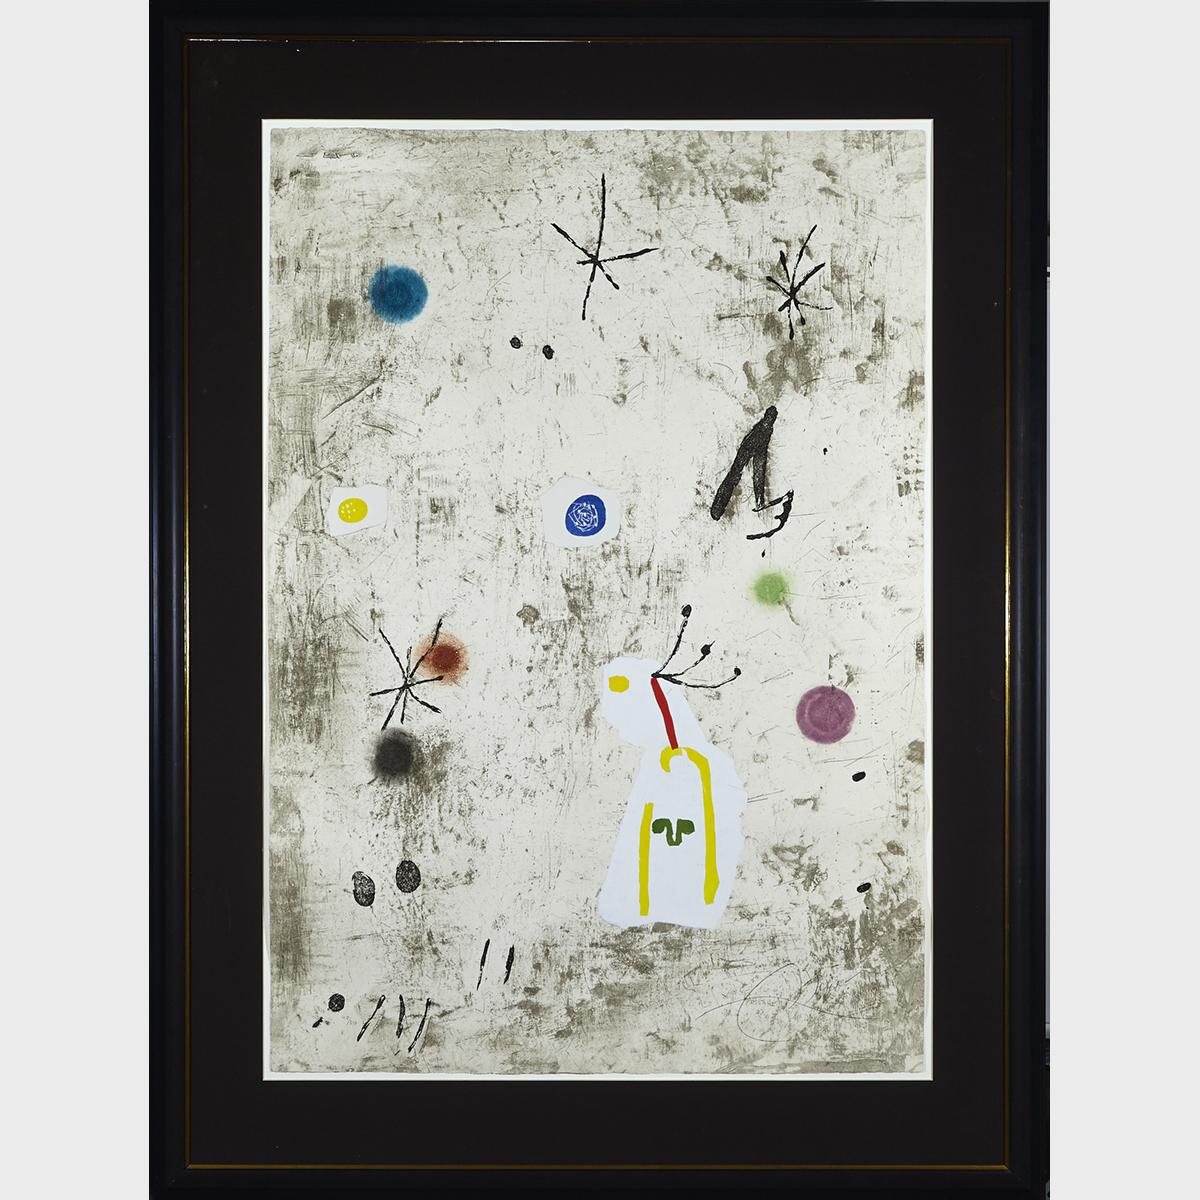 Joan Miro (1893-1983)